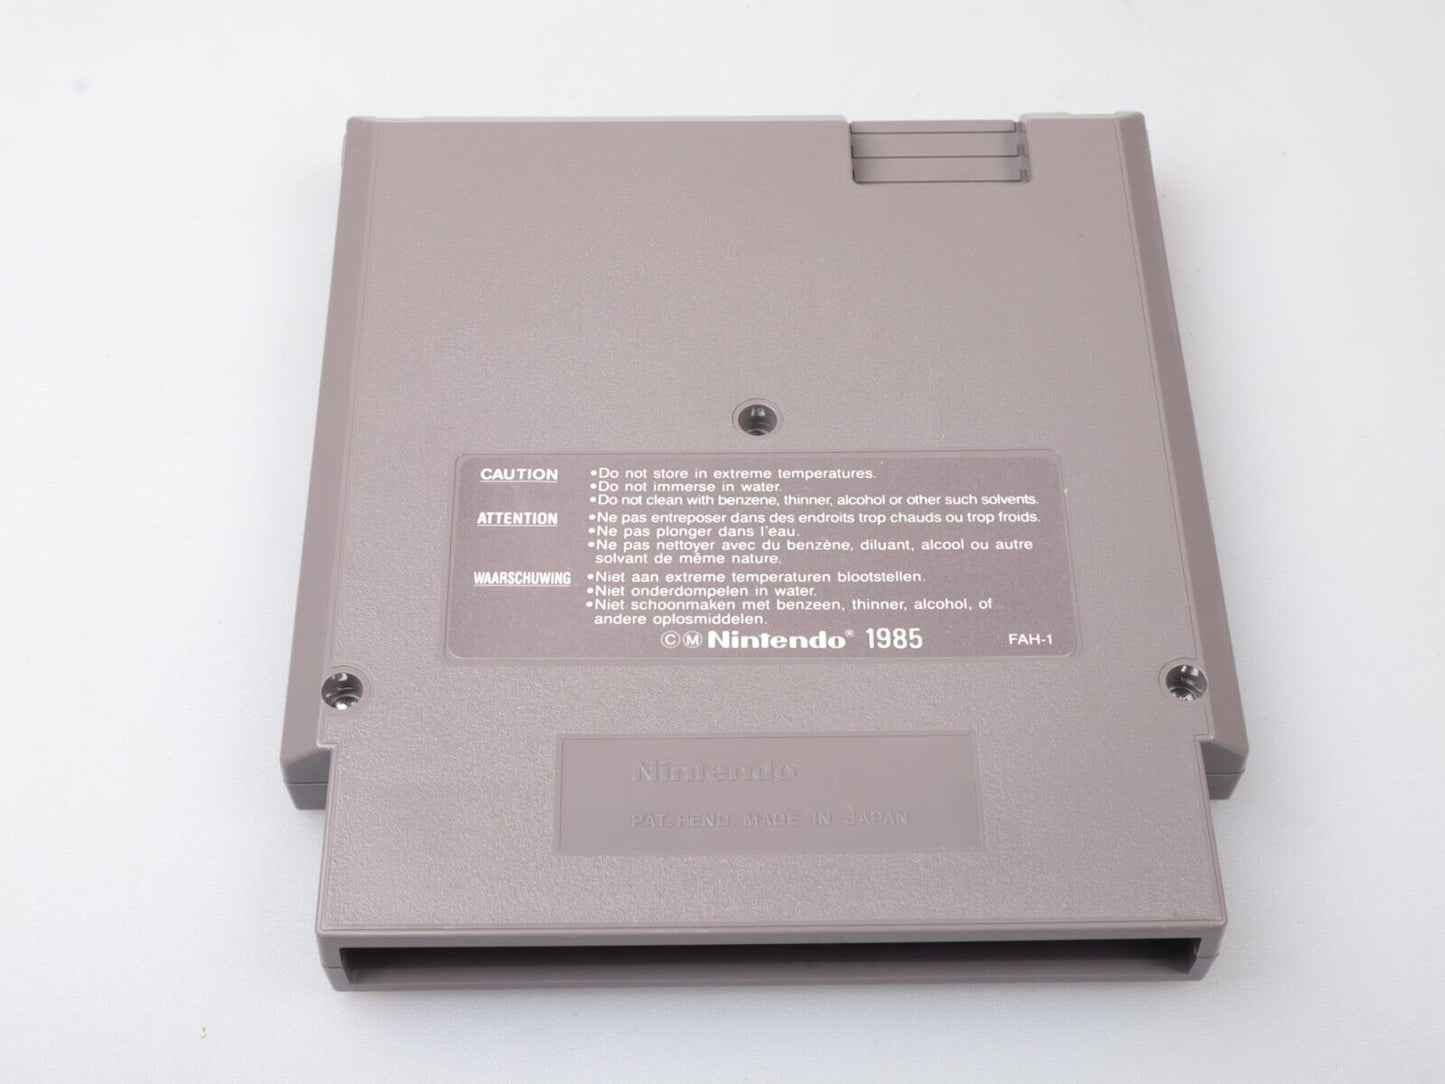 NES | Top Gun The Second Mission | FAH | Nintendo NES Cartridge